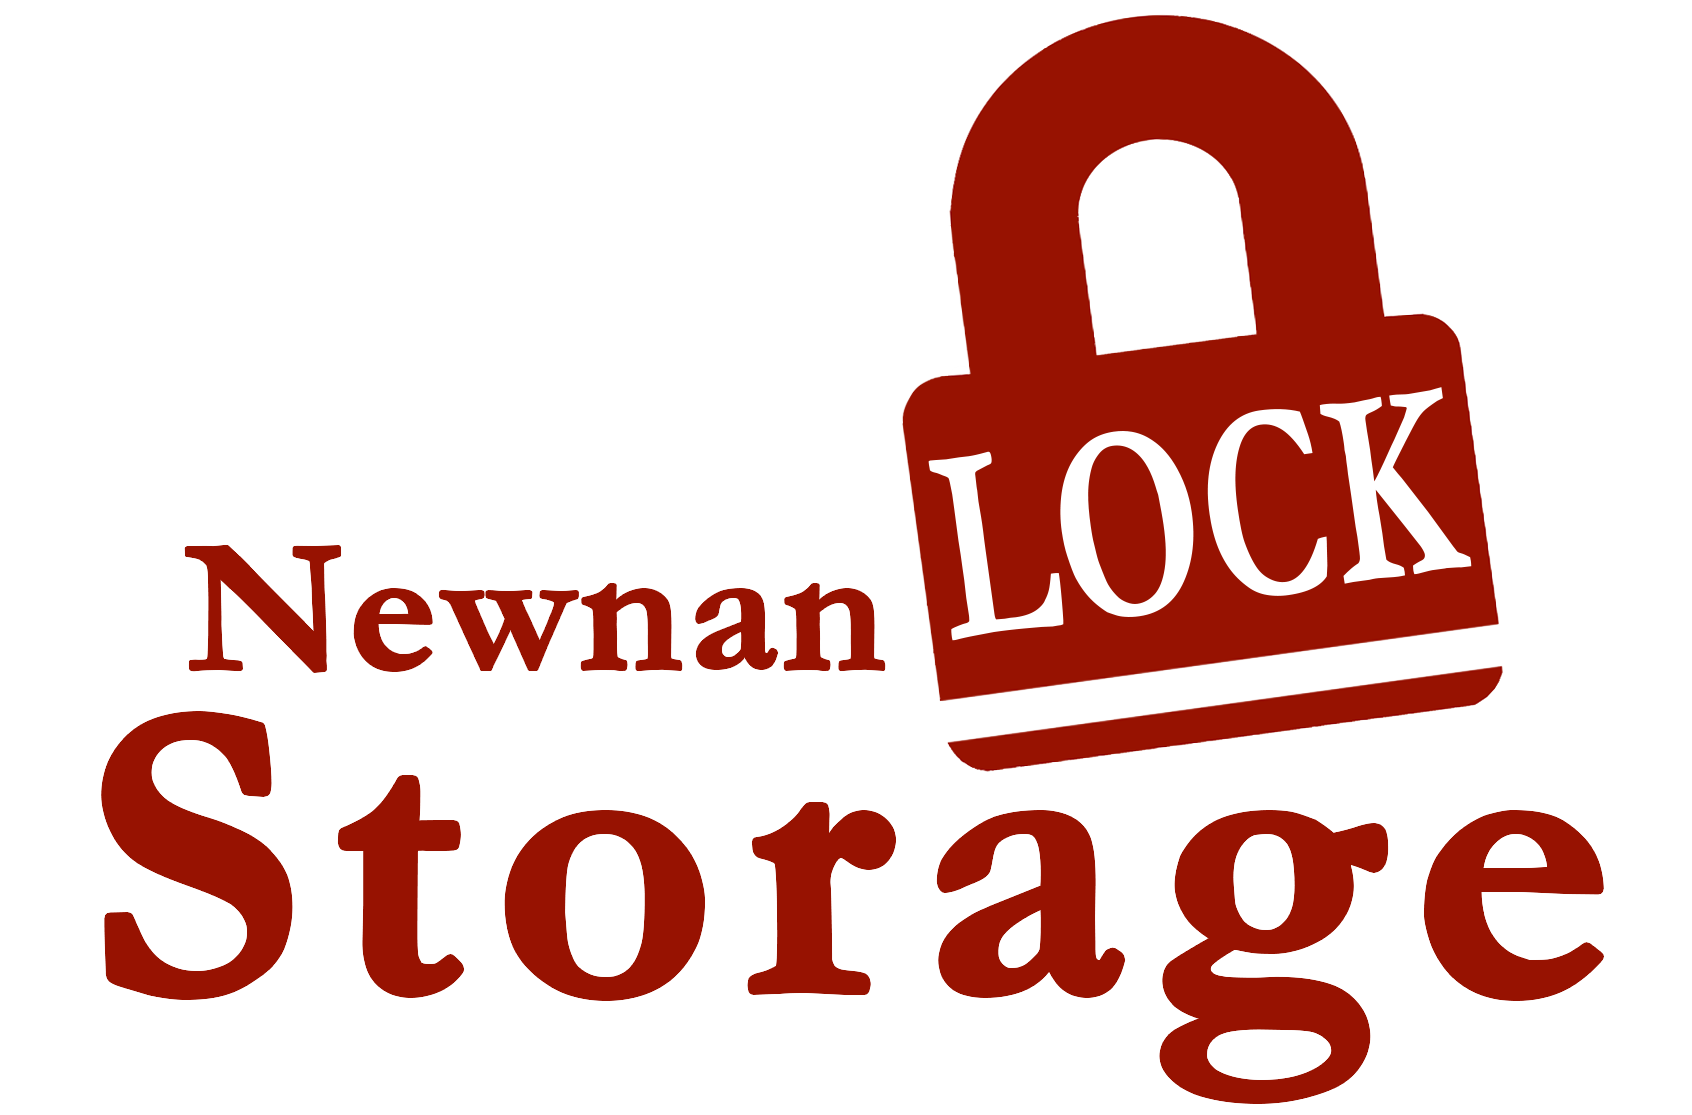 Newnan Lock Storage in Newnan, GA